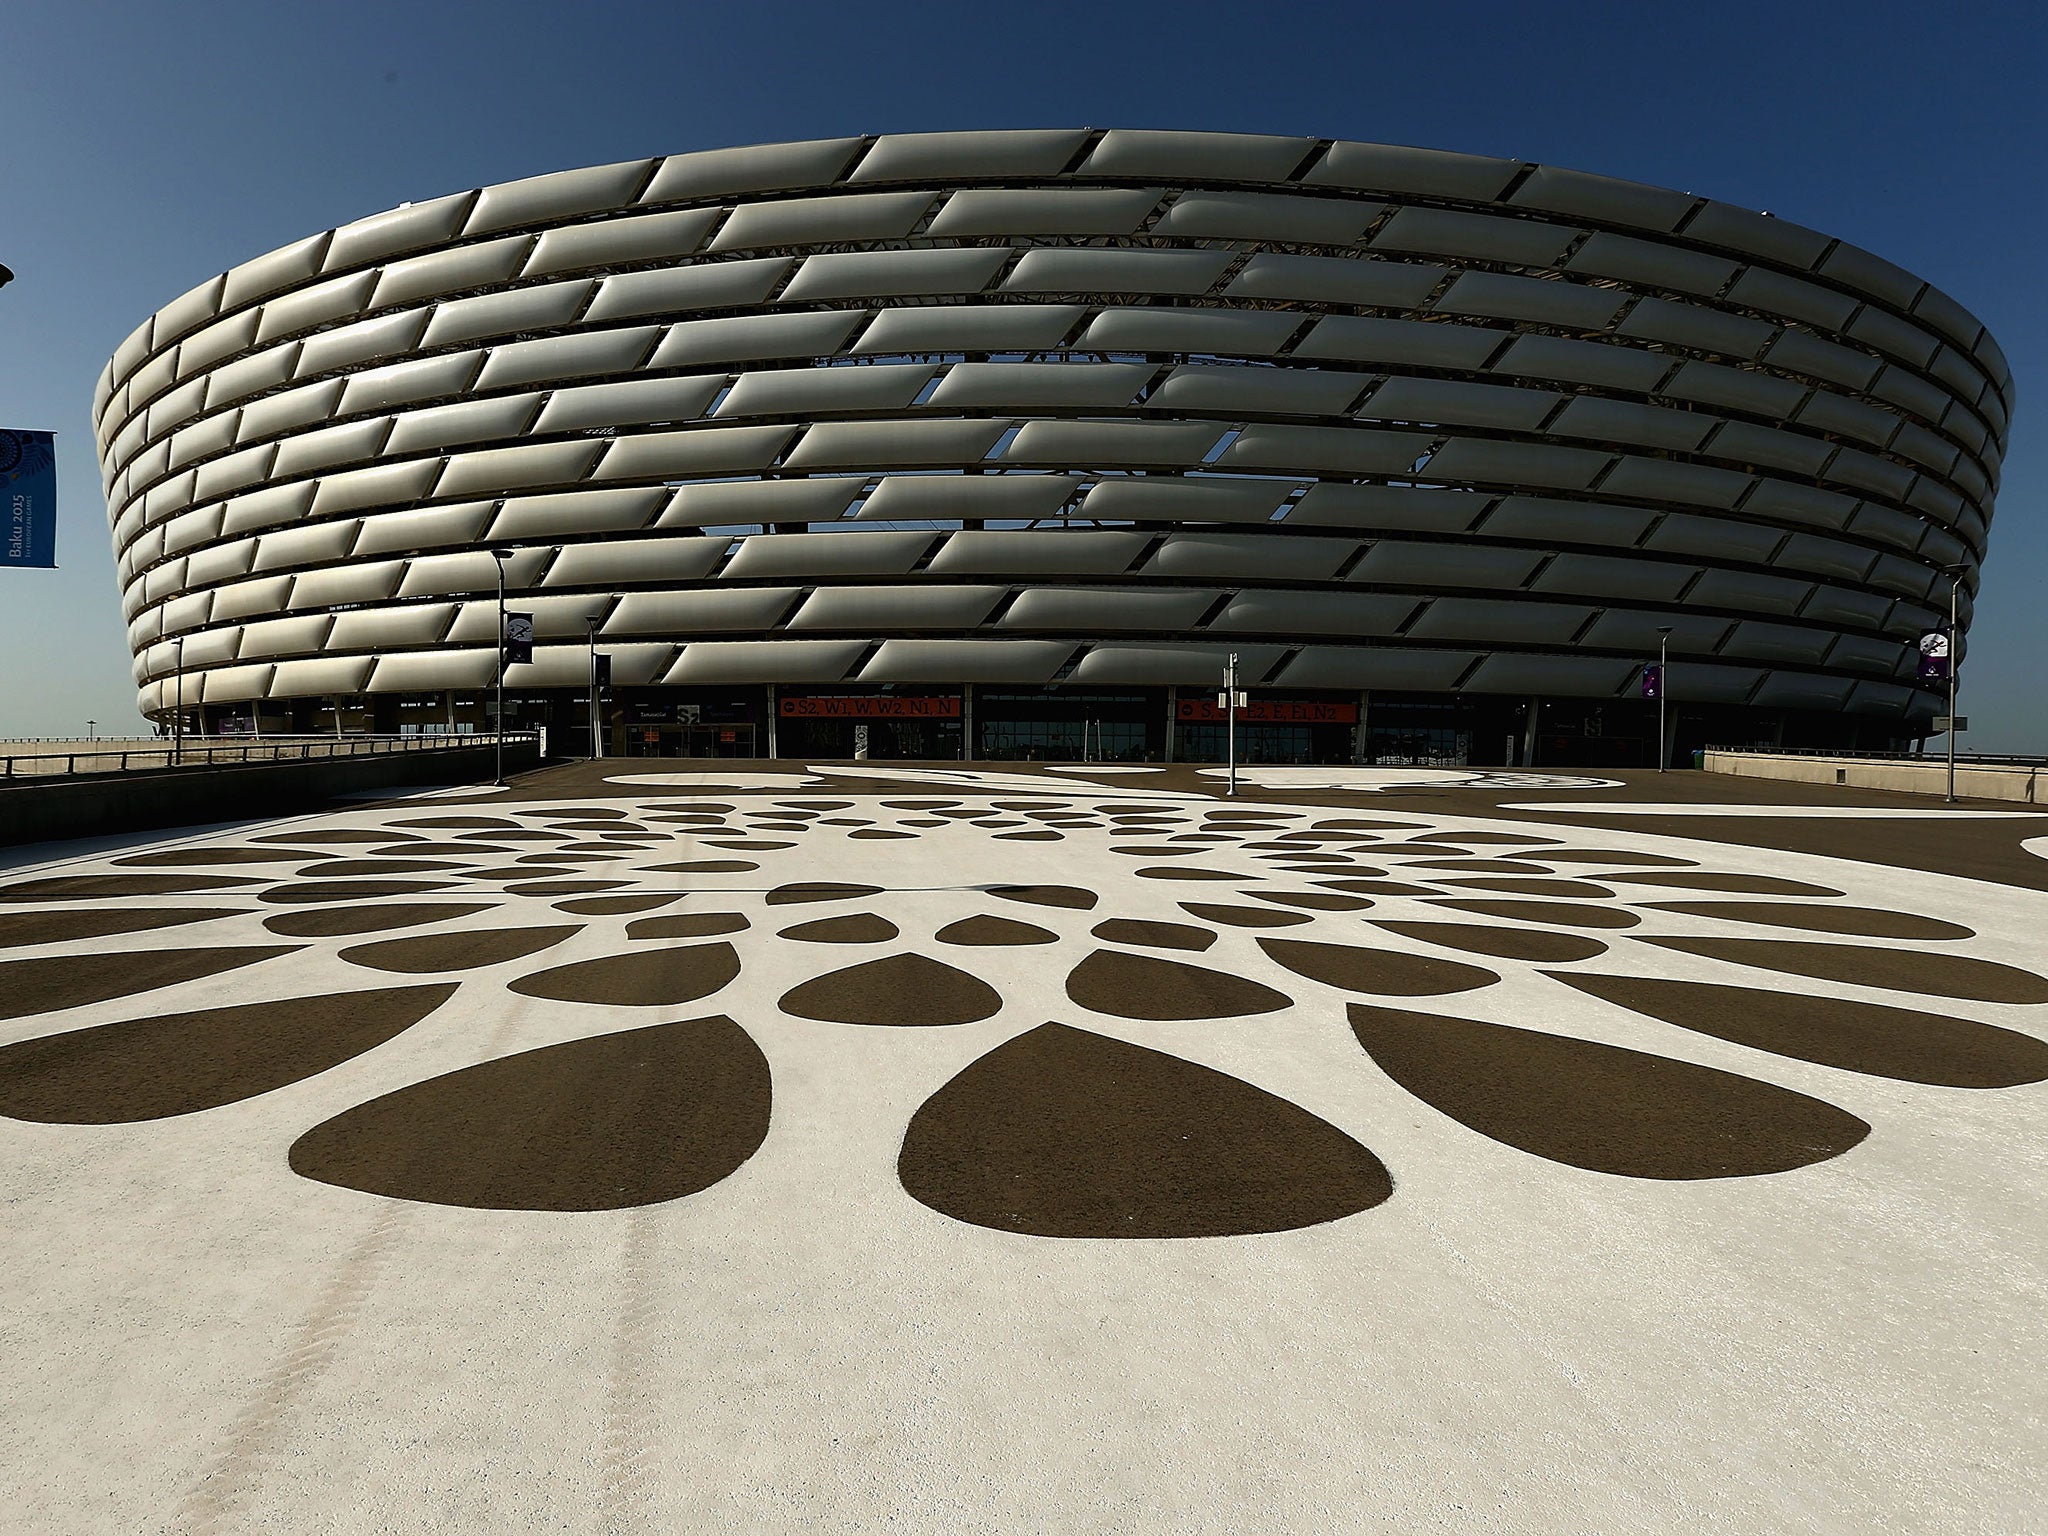 The Olympic Stadium in Baku